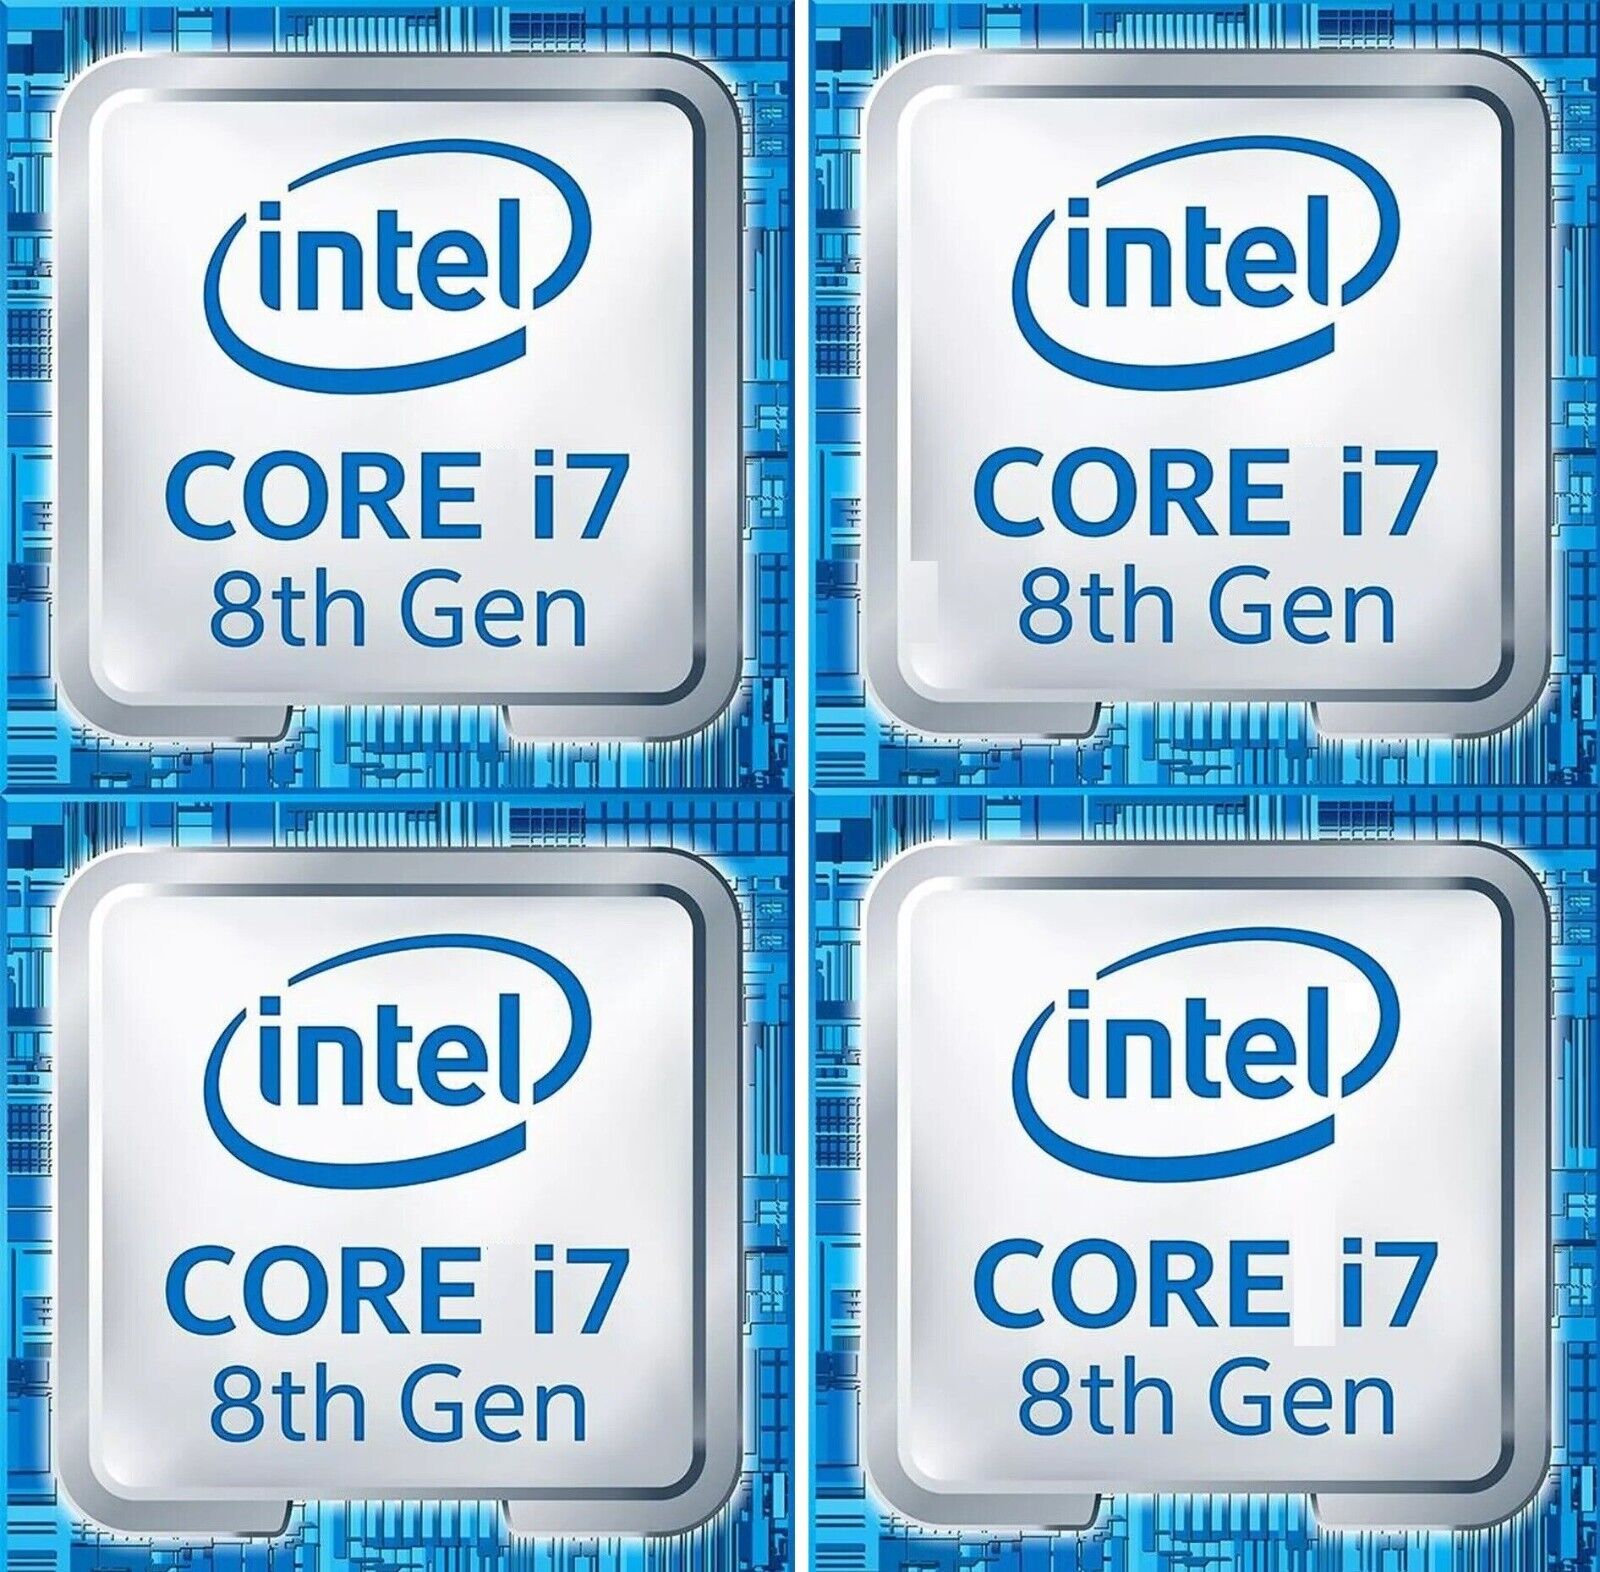 Intel Core i7 8th Gen CPU Sticker Laptop/PC Desktop Badge Label Decal Emblem